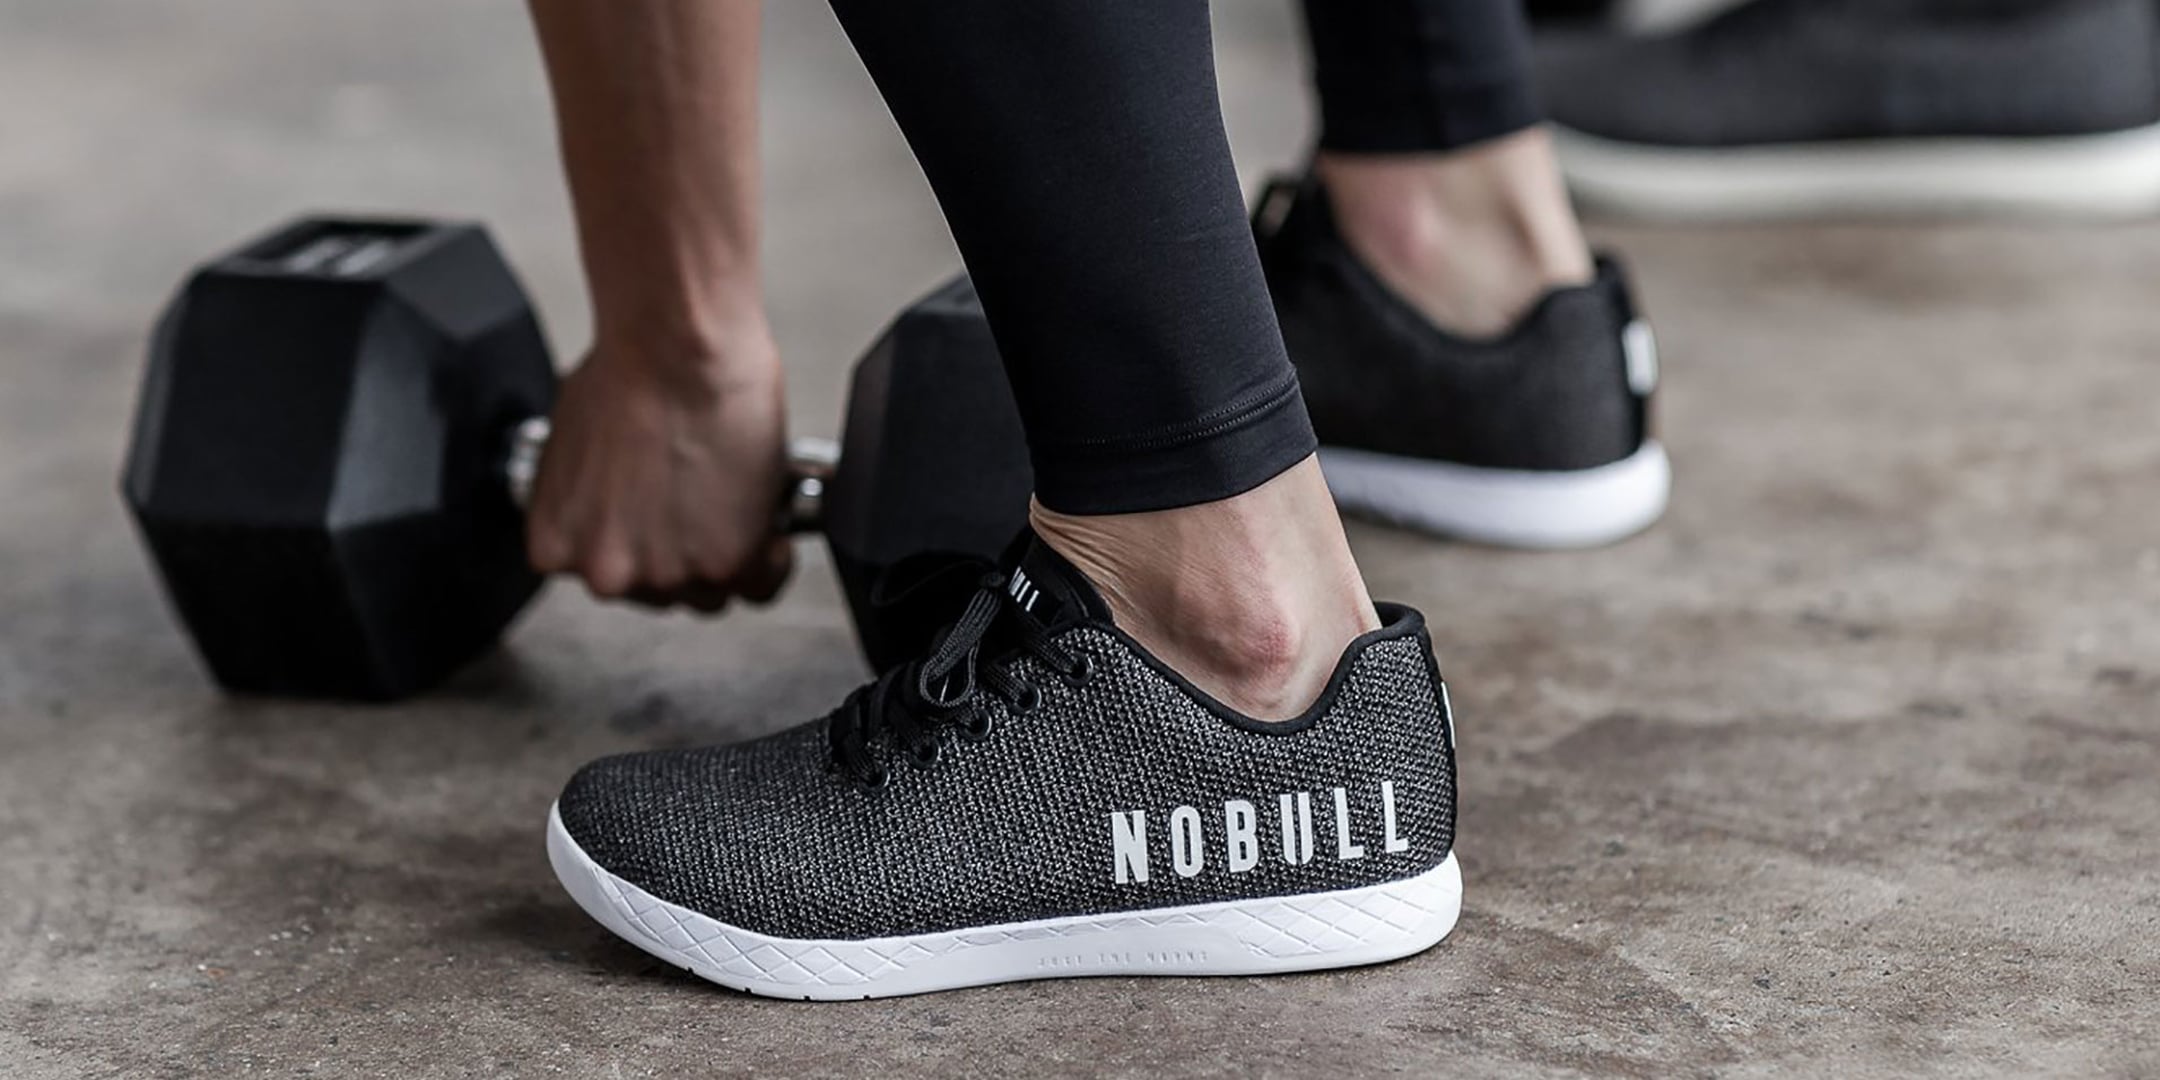 Nobull Shoe Review